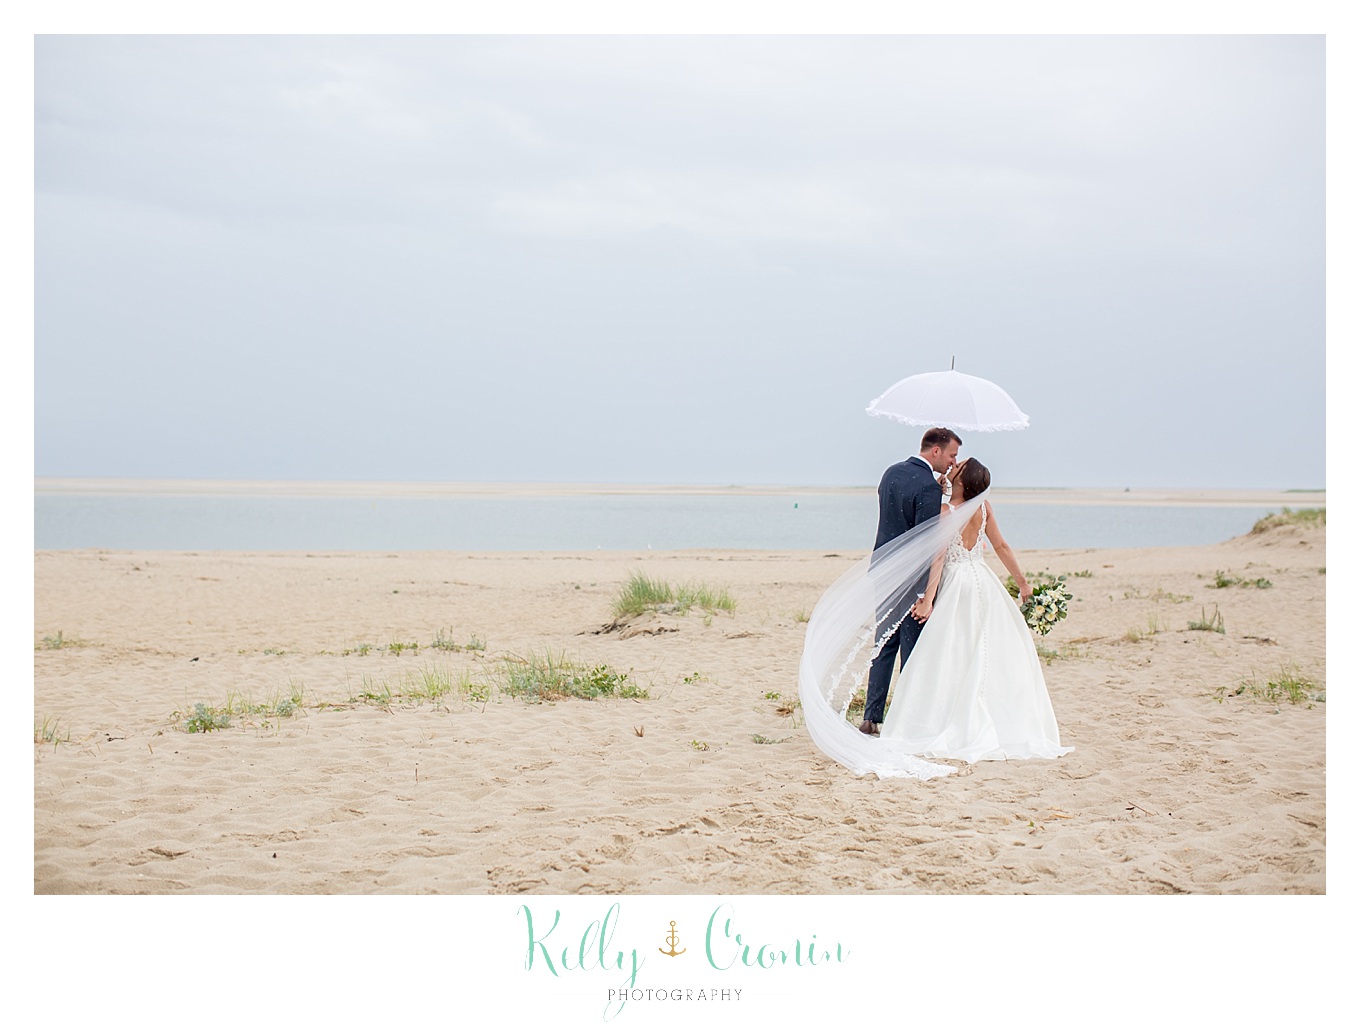 A bride and groom walk along the beach under an umbrella.